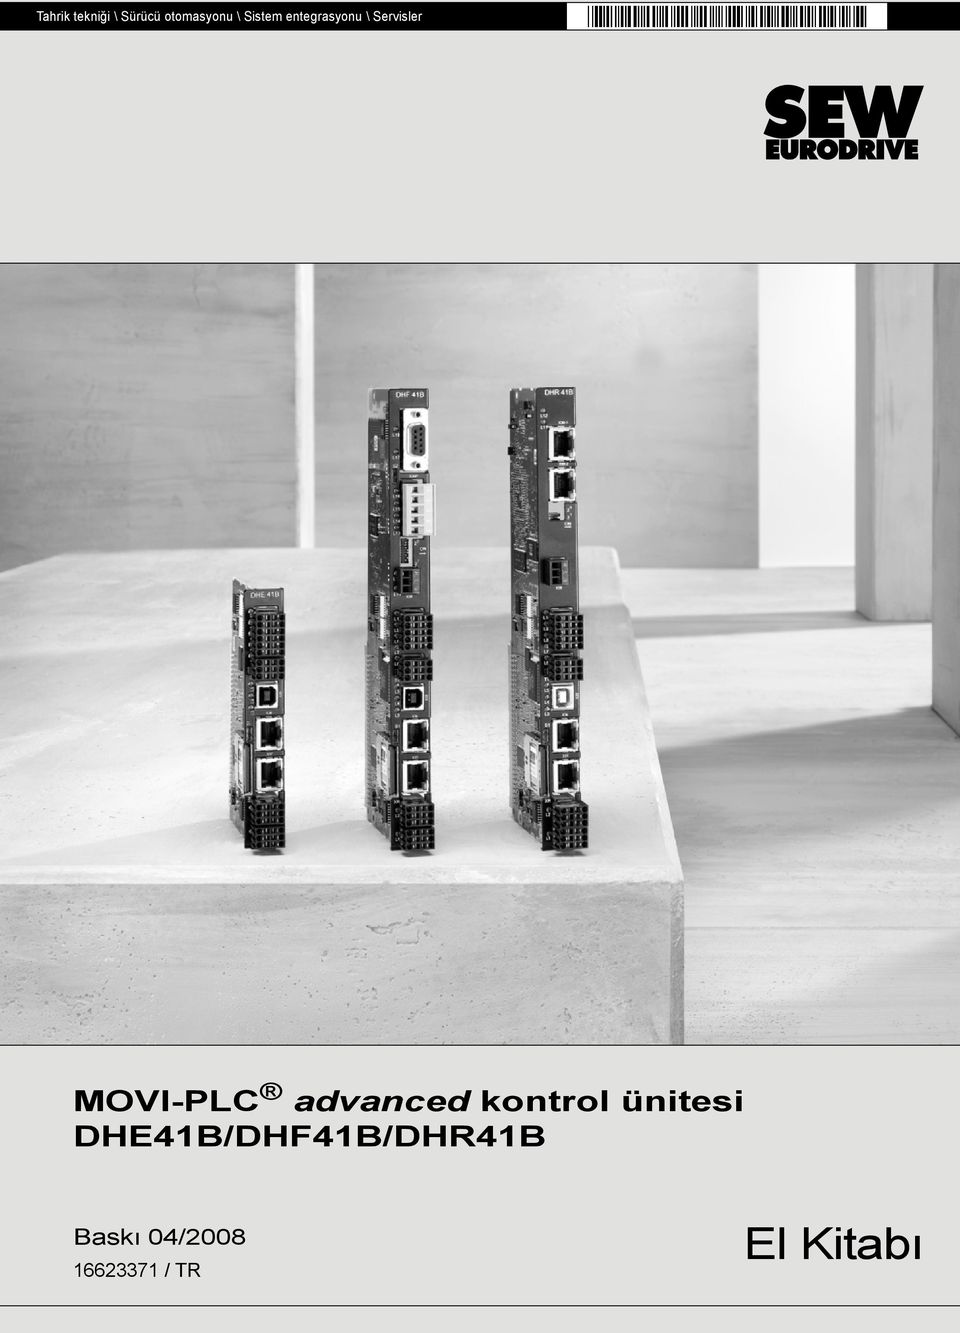 MOVI-PLC advanced kontrol ünitesi